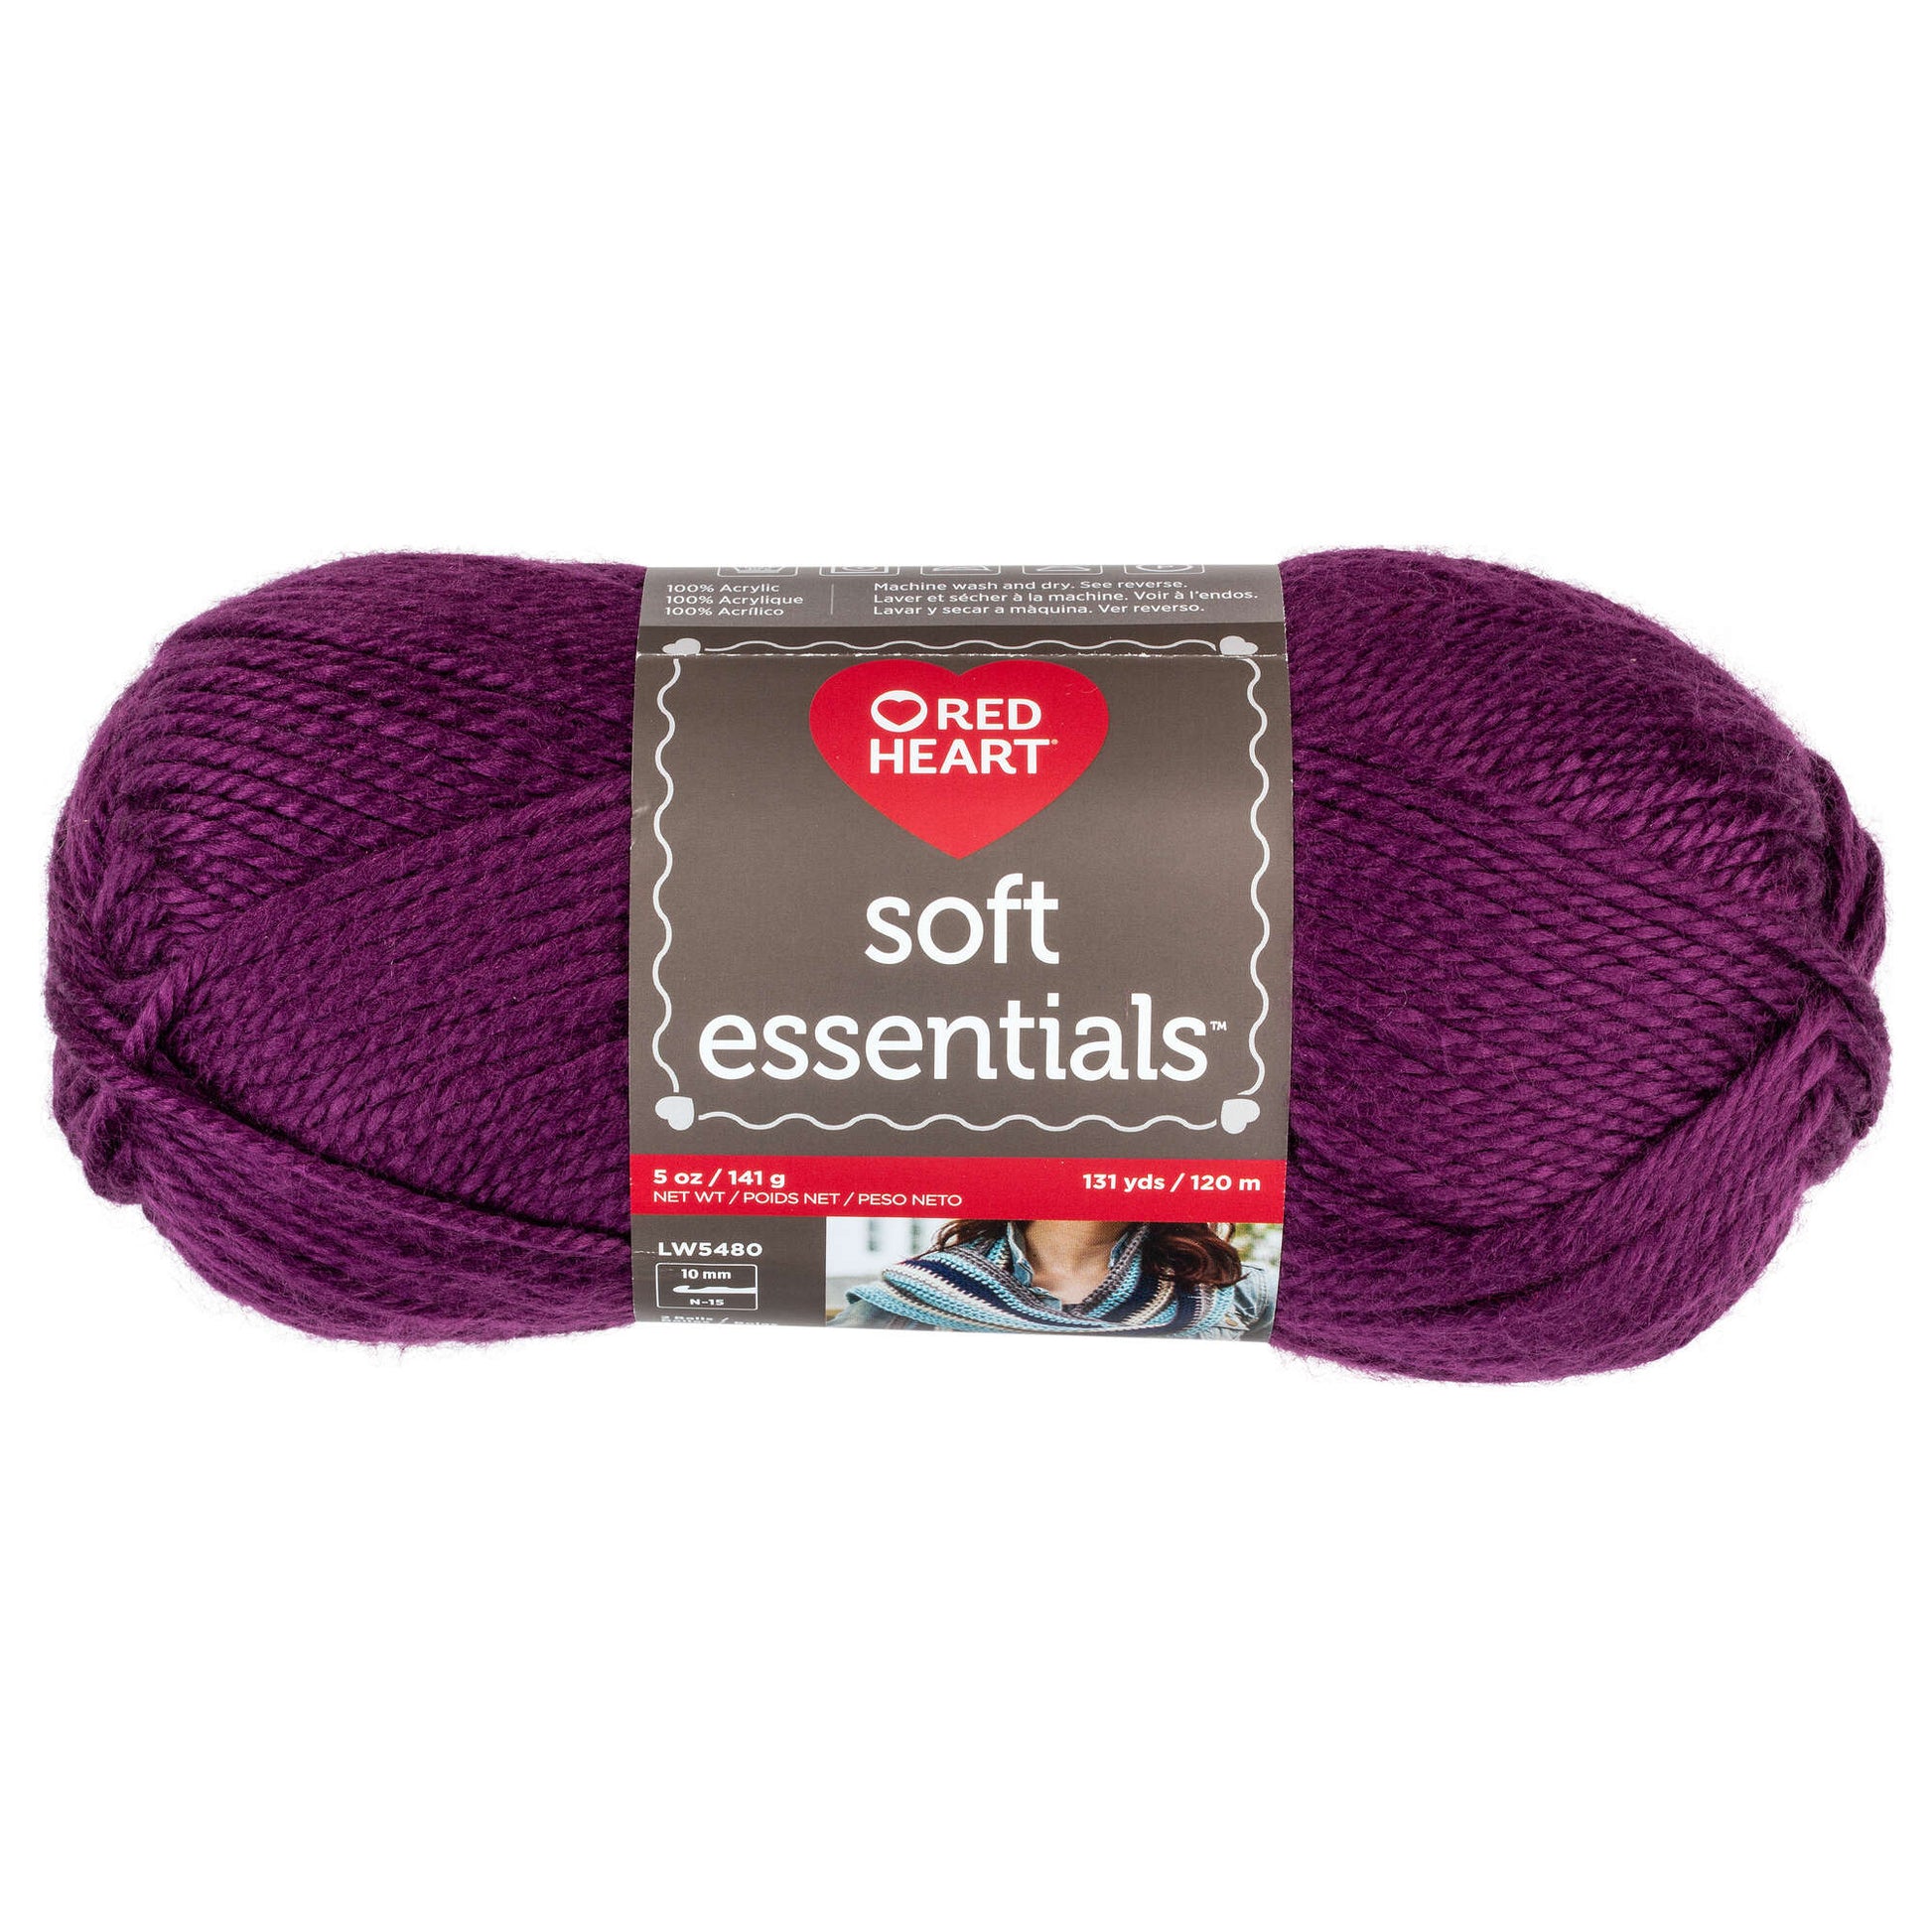 Red Heart Soft Essentials Yarn - Discontinued shades